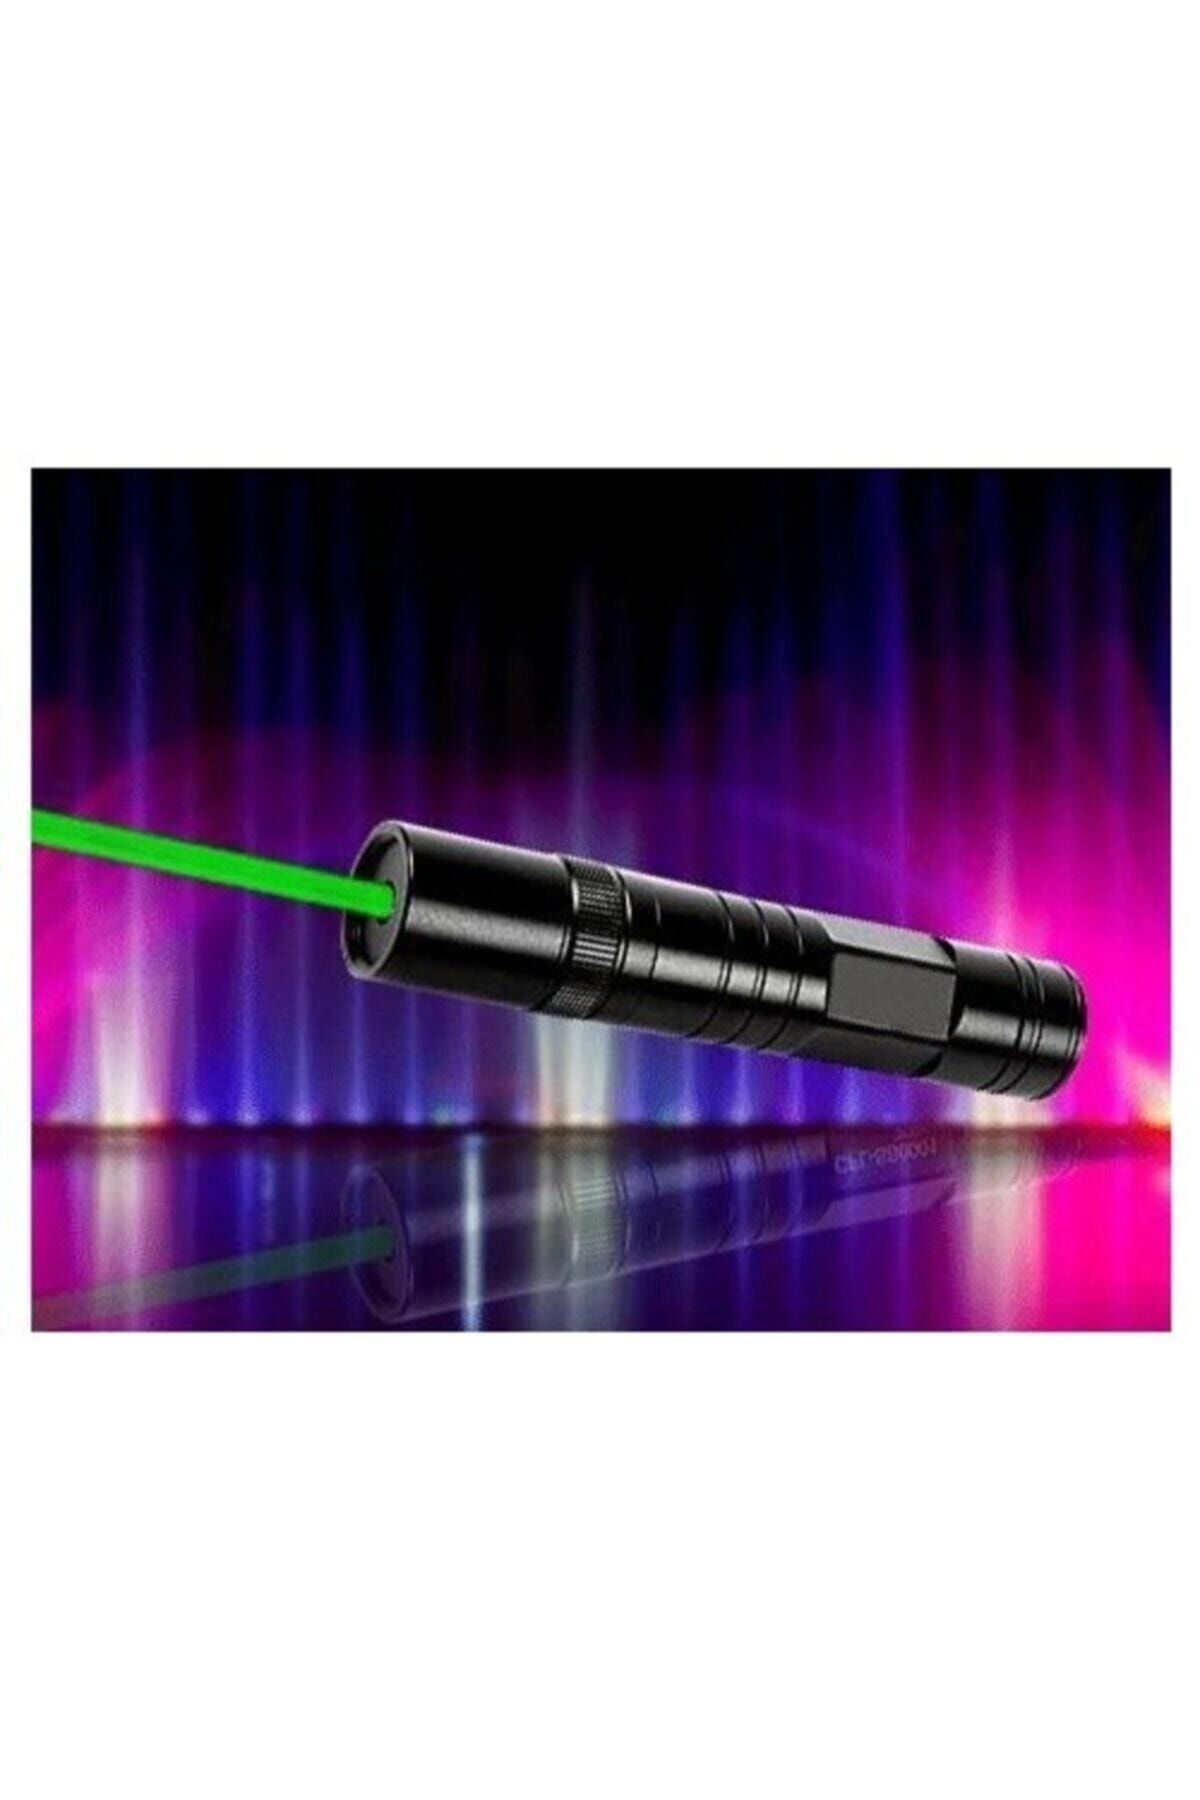 Sorbibilisim Micro Usb Kablo Şarjlı Yeşil Lazer Pointer Yakabilen Lazer Yl- 303-usb 5 Km Fiyatı, Yorumları - Trendyol